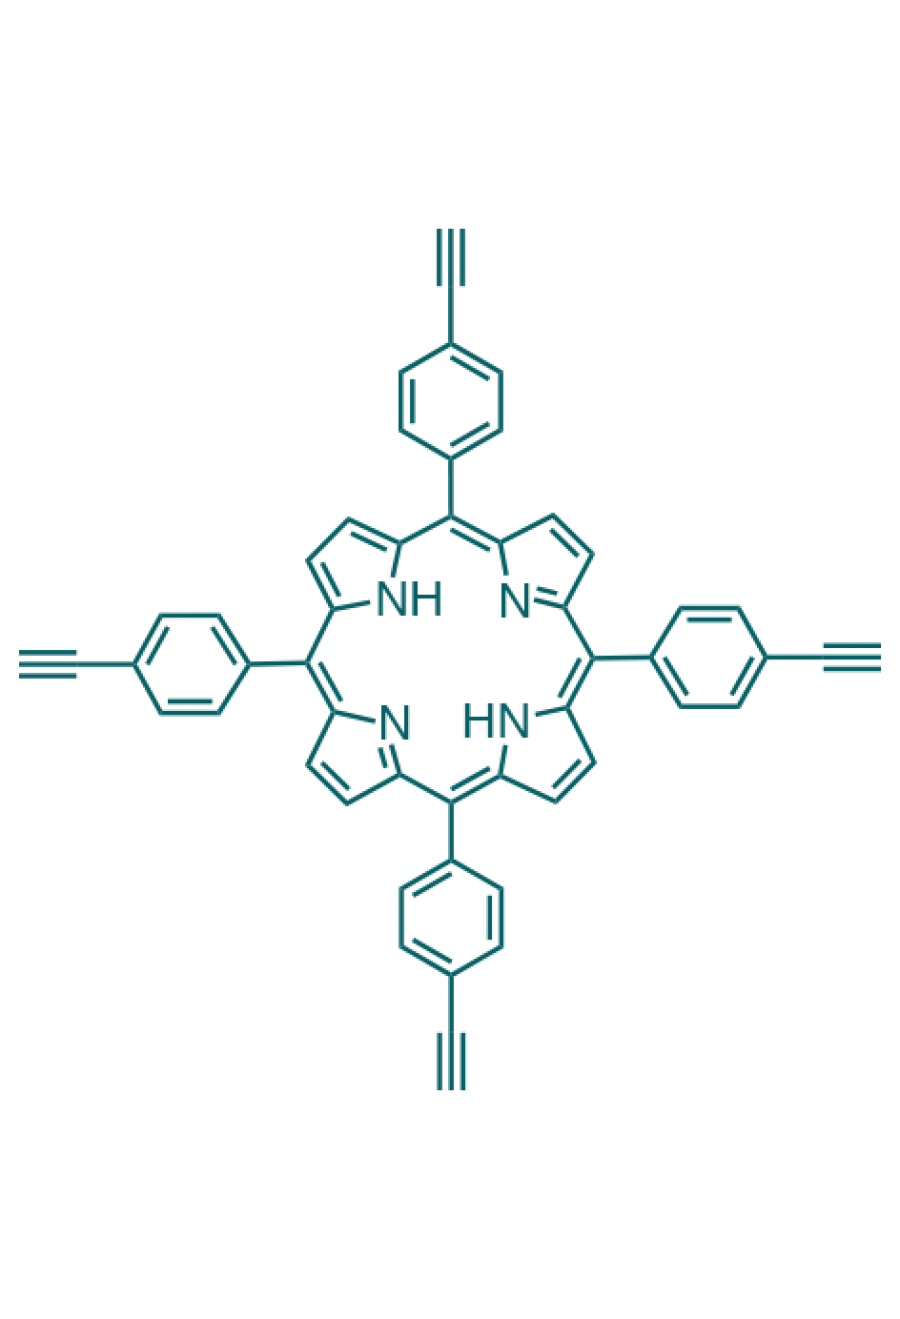 5,10,15,20-(tetra-4-ethynylphenyl)porphyrin  | Porphychem Expert porphyrin synthesis for research & industry